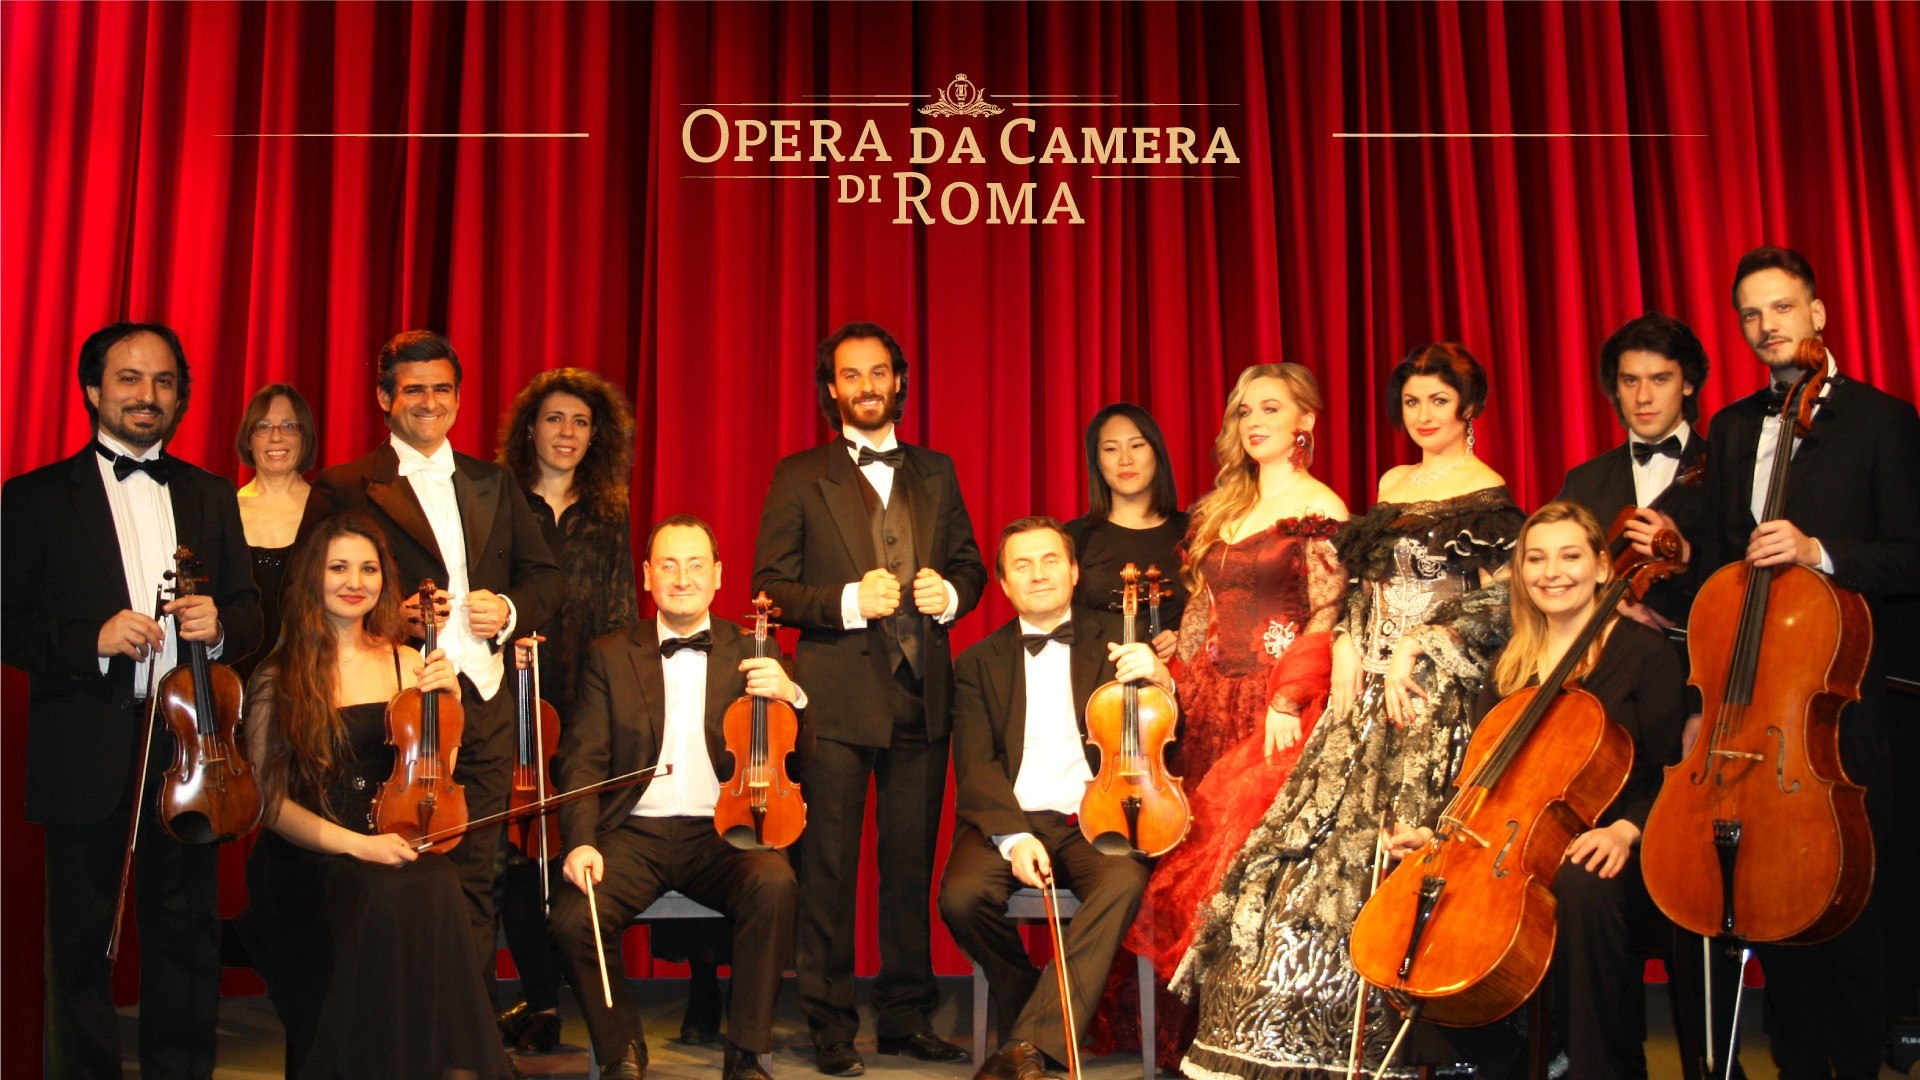 The Most Beautiful Opera Aria, Neapolitan Songs and Italian Classic